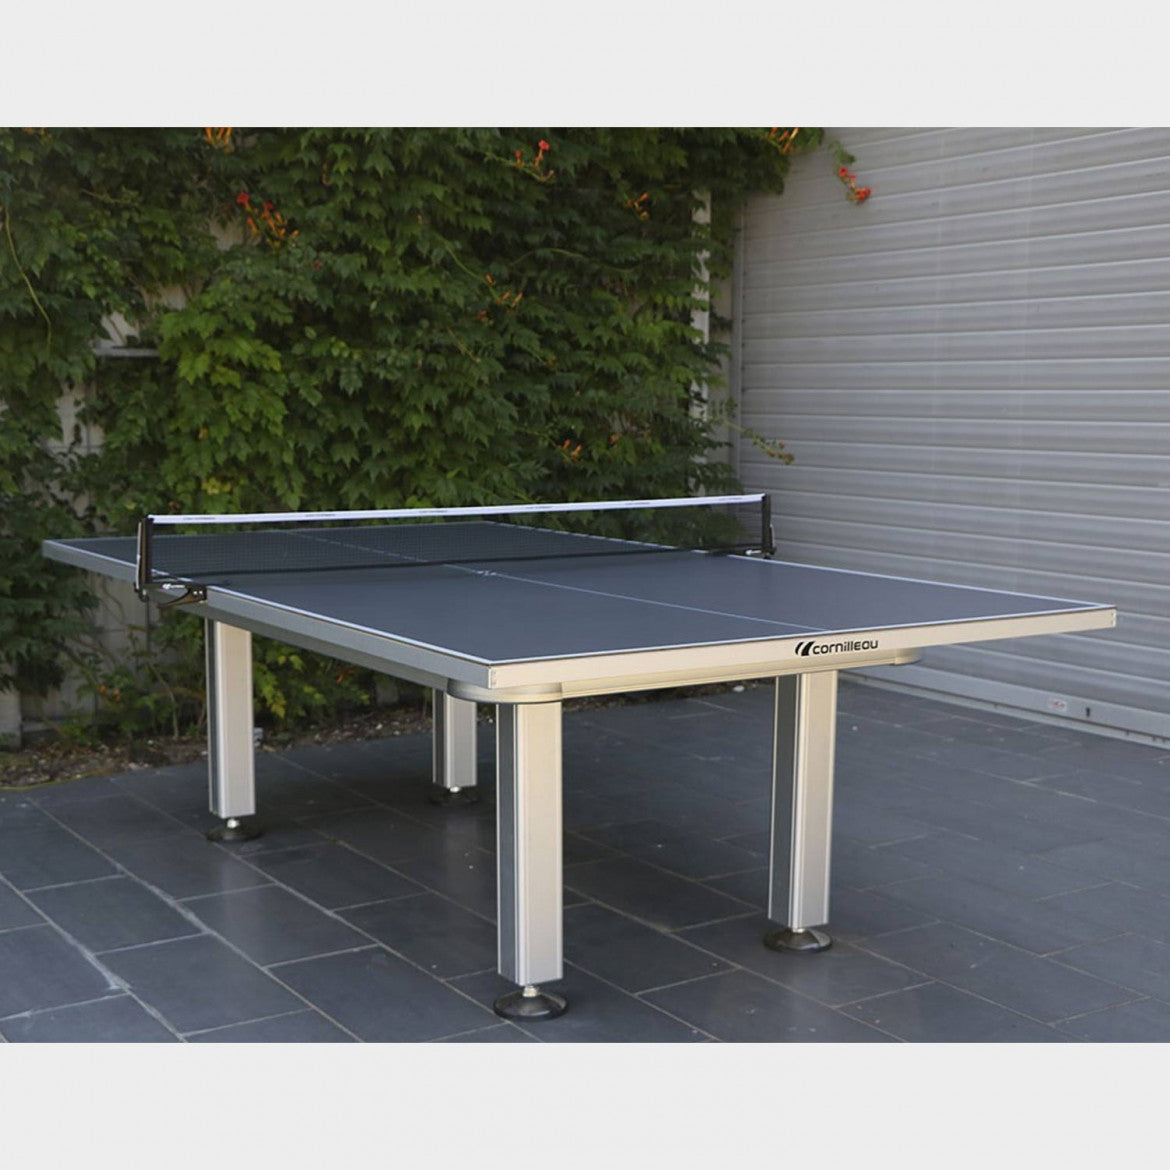 Cornilleau Grey Outdoor Table Tennis Conversion Top